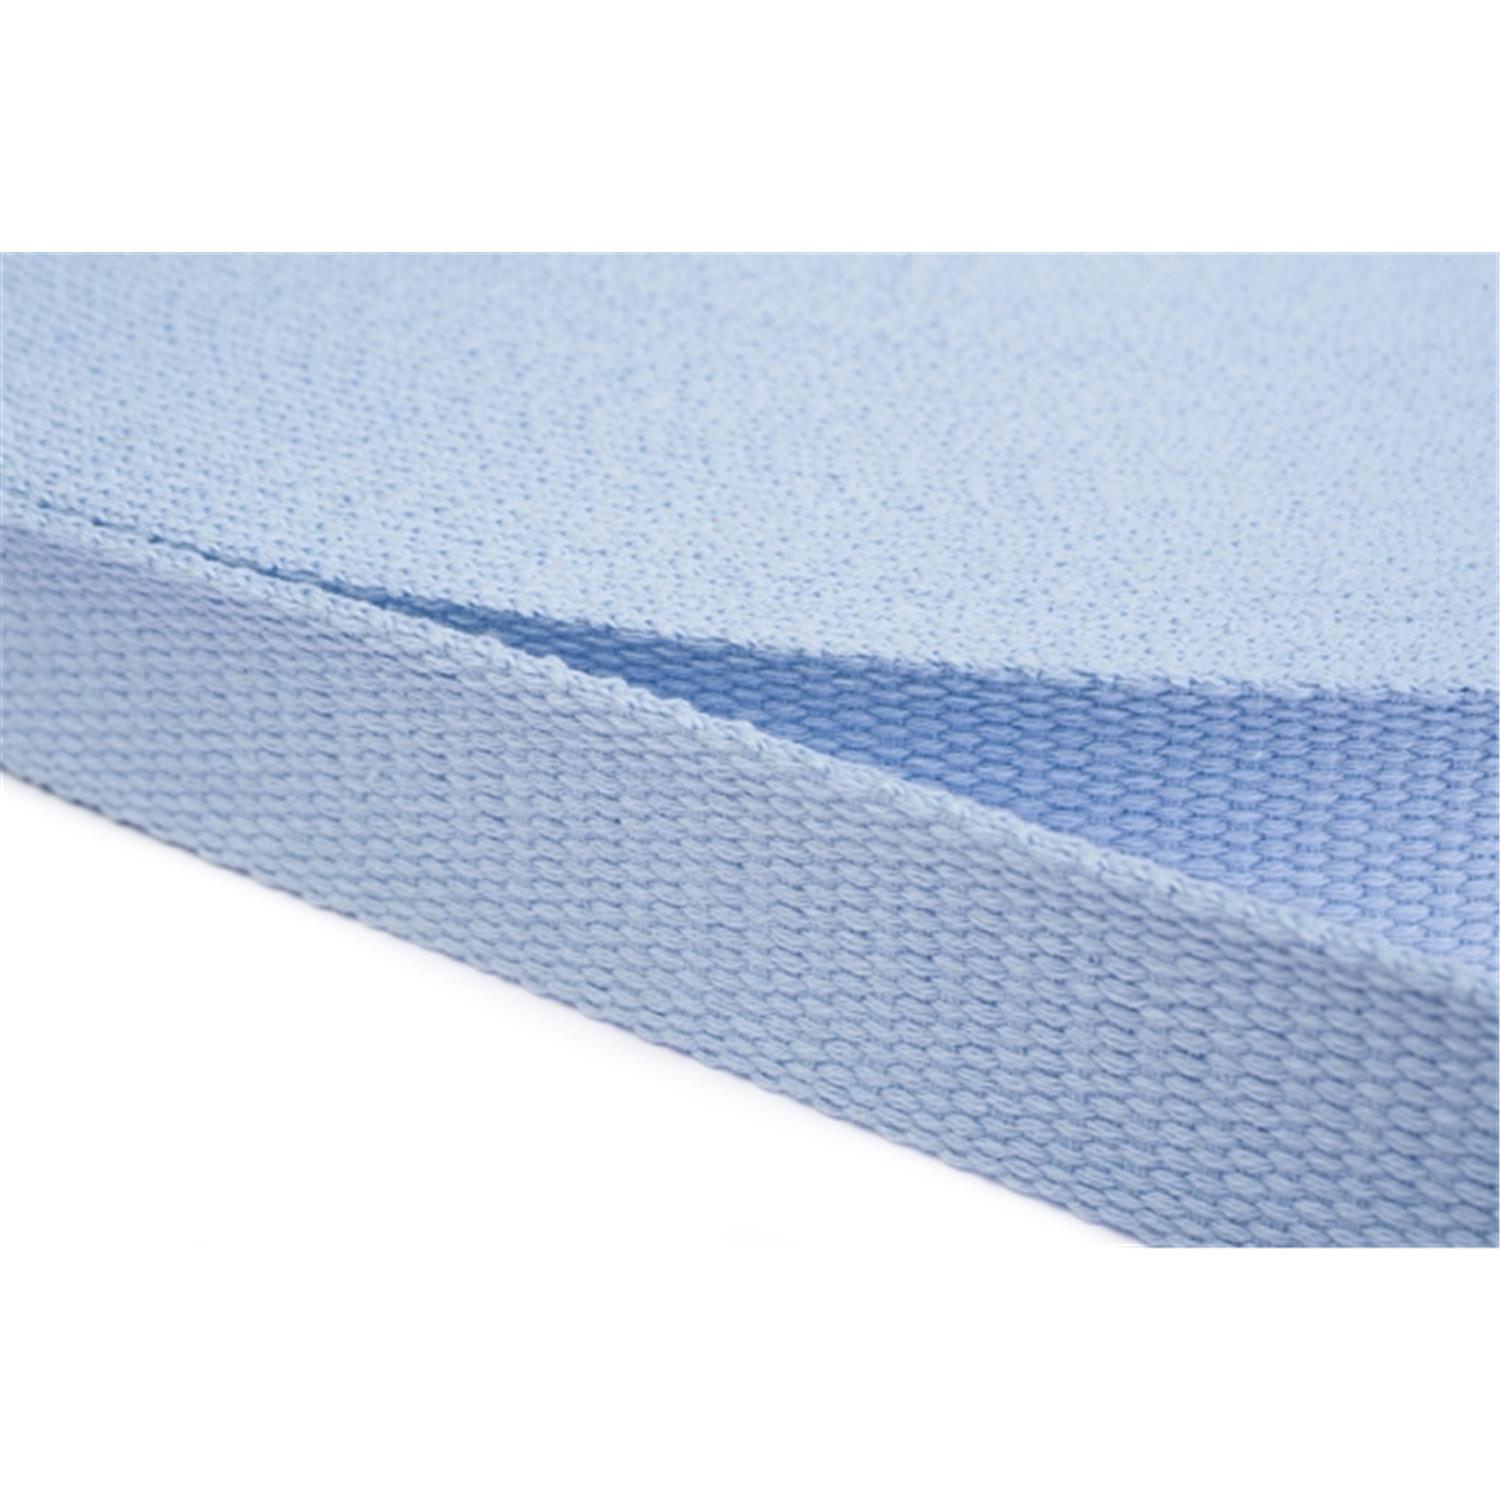 Gurtband aus Baumwolle 40mm in 20 Farben 11 - hellblau 12 Meter